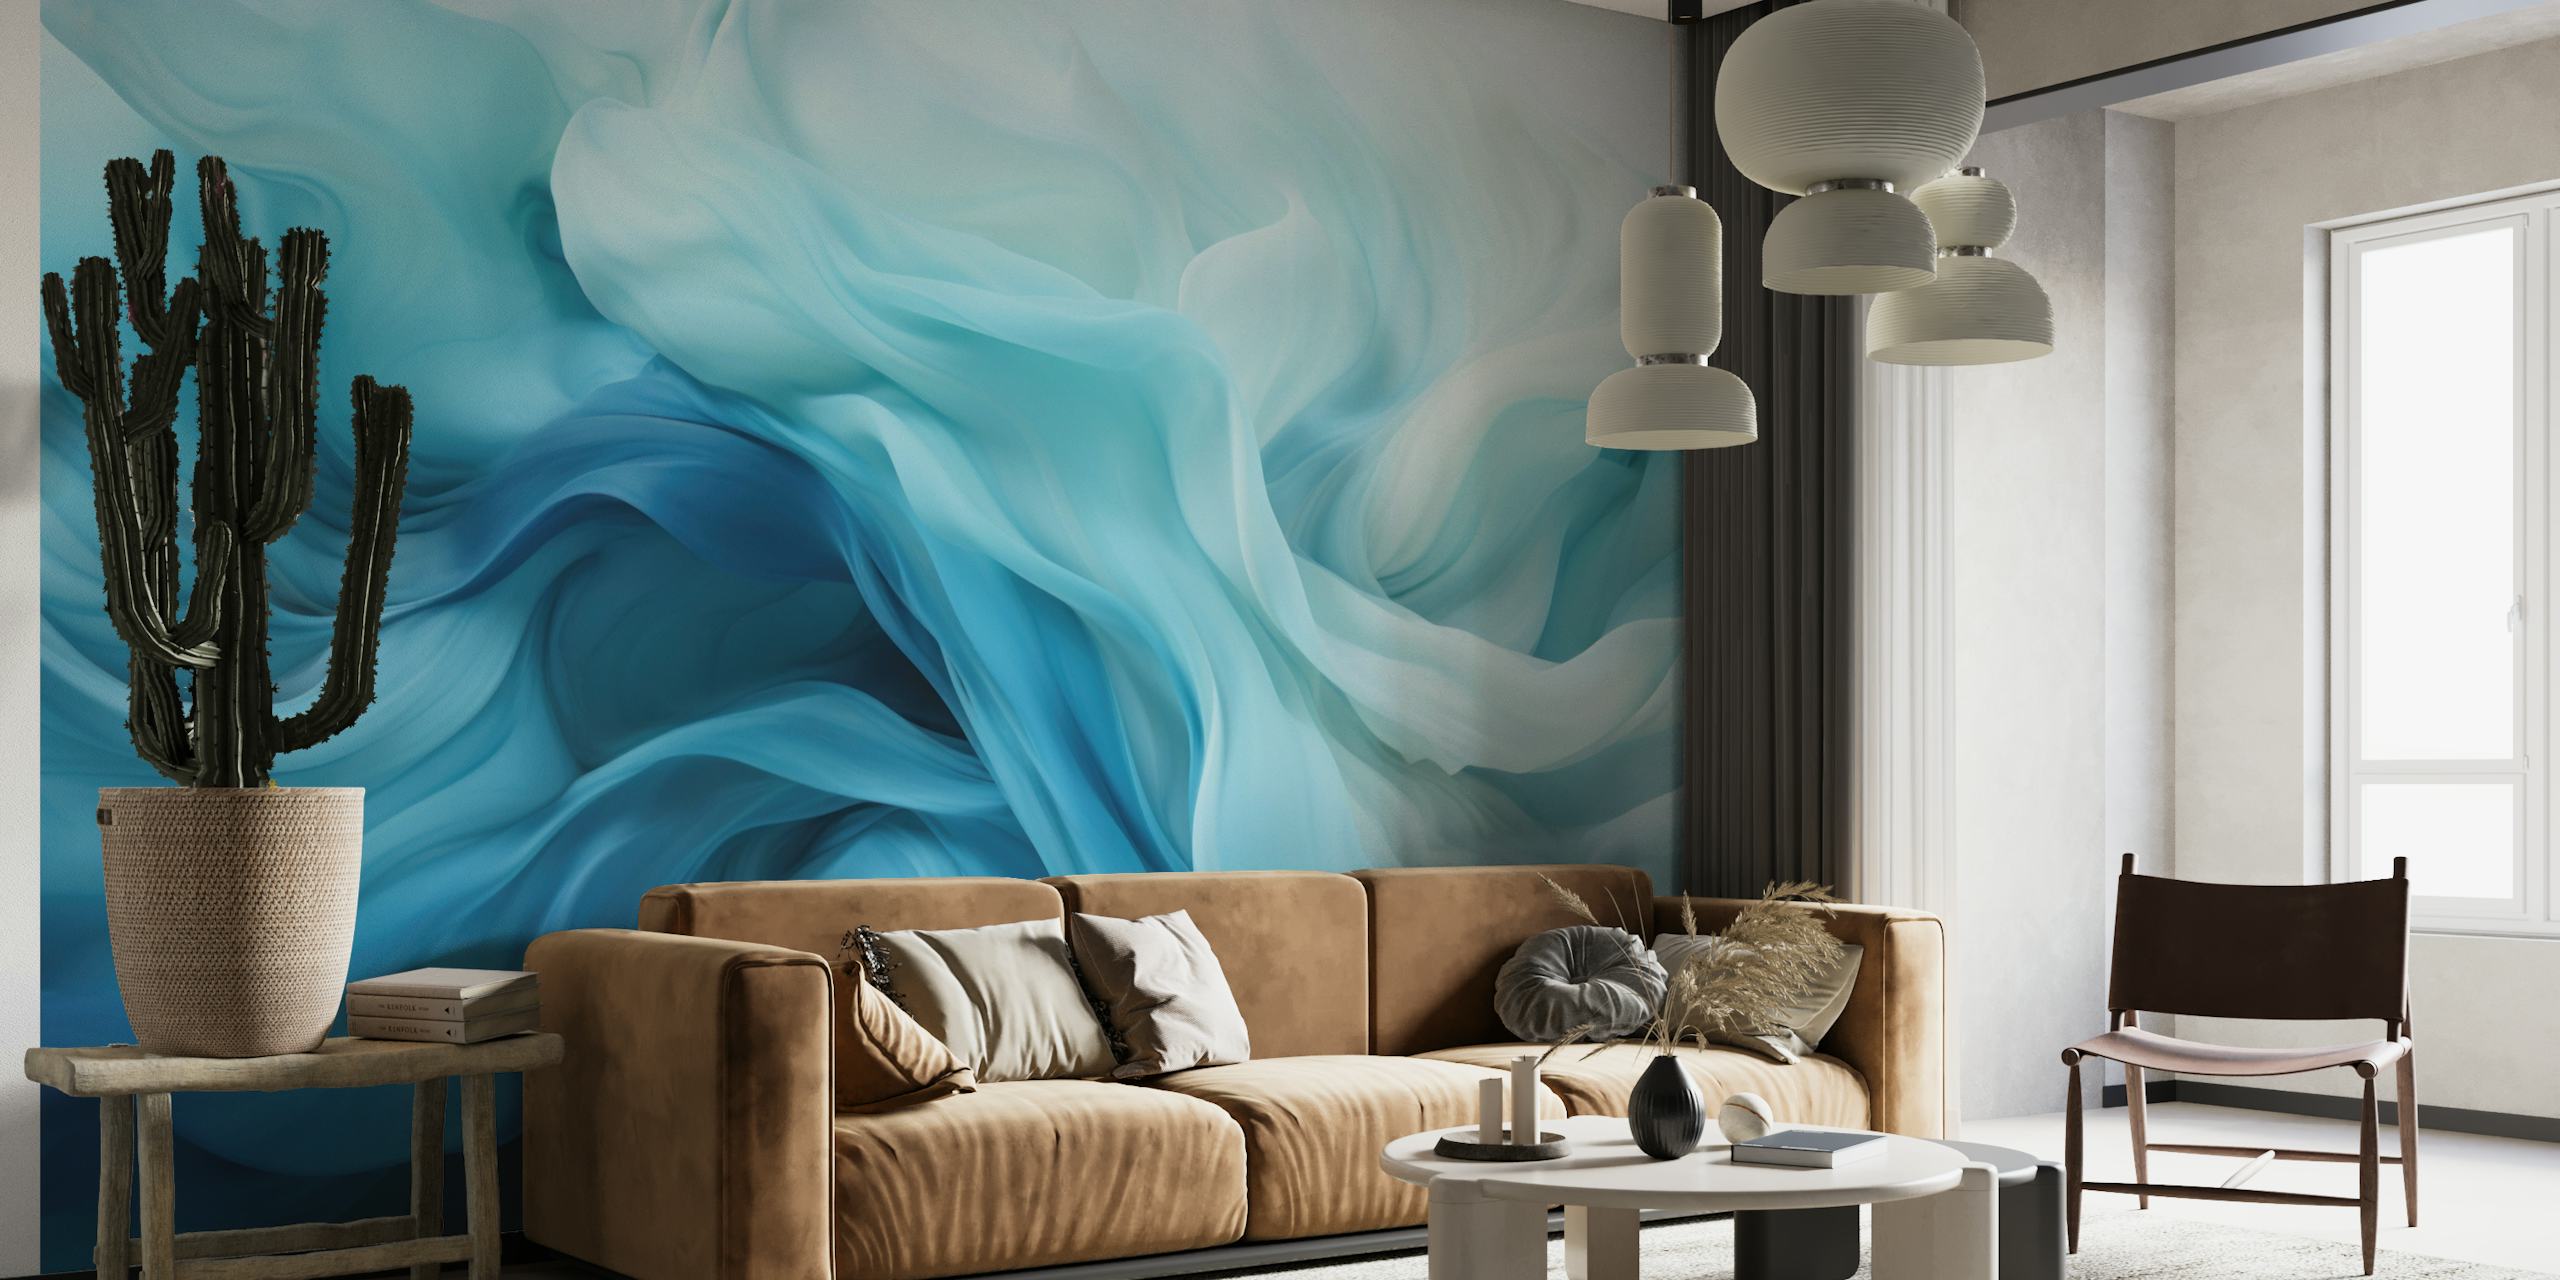 fotomural vinílico de parede fluido abstrato azul suave e branco